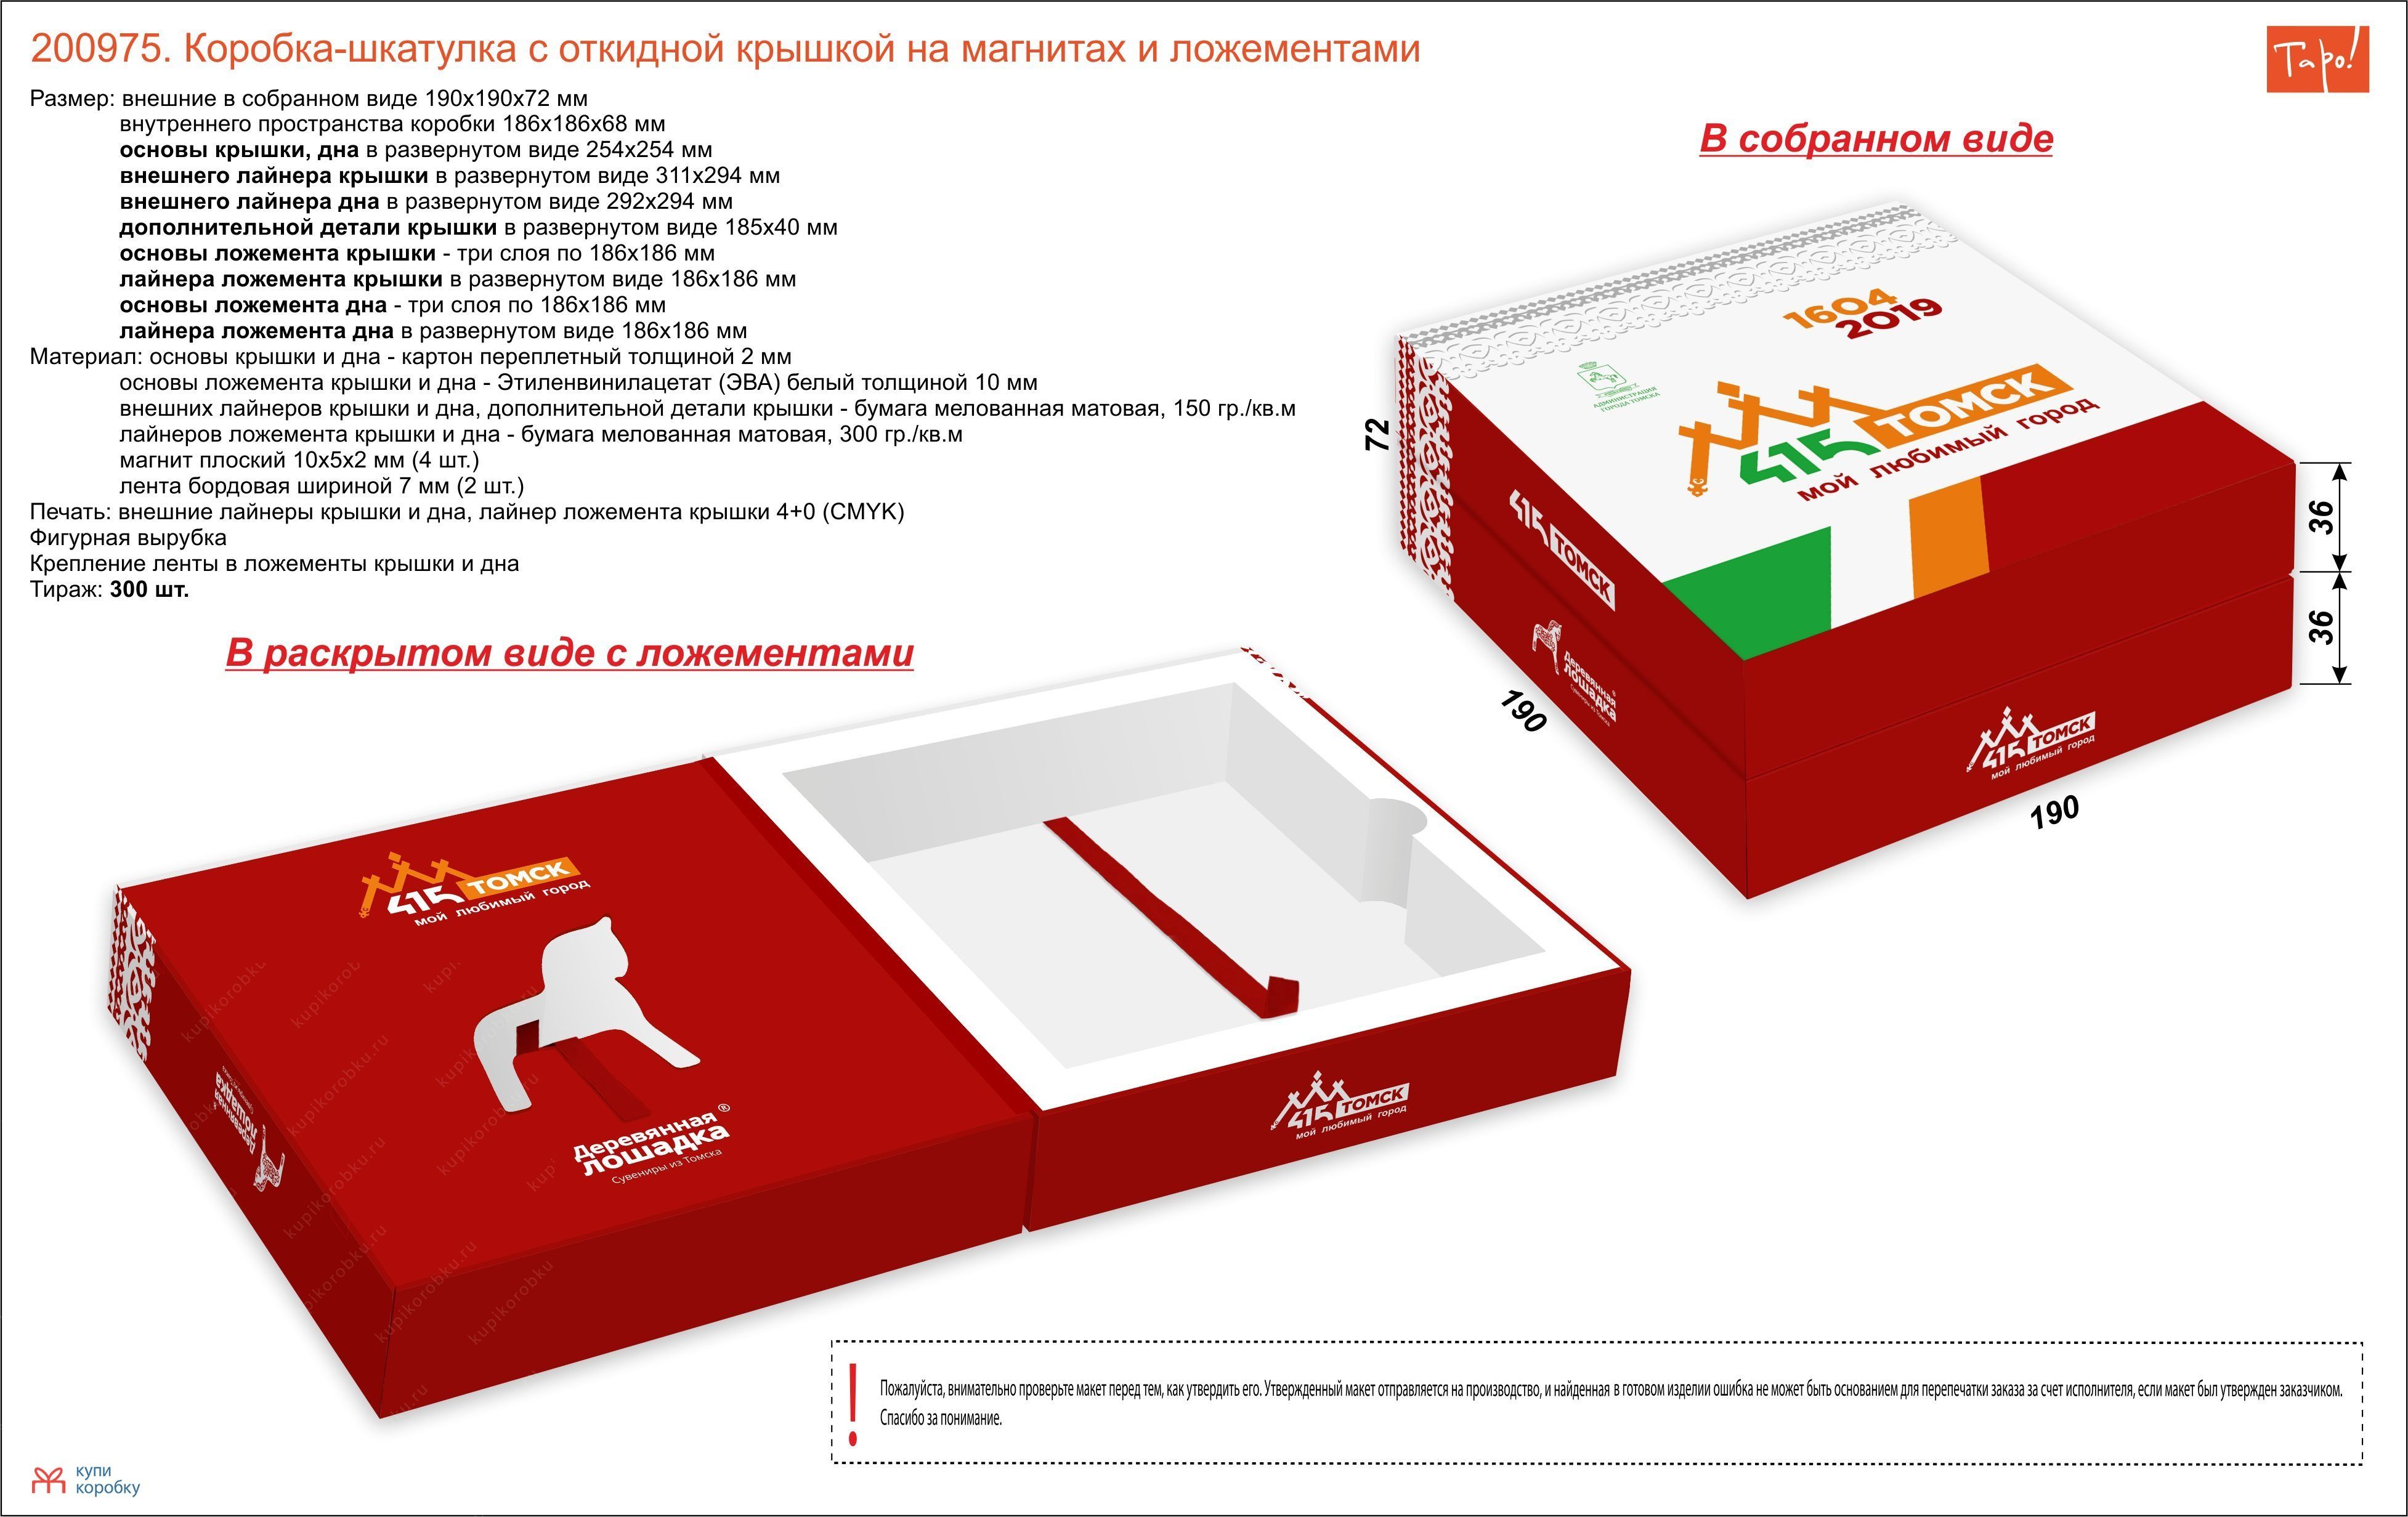 Коробка шкатулка на магните с ложементом для города Томска